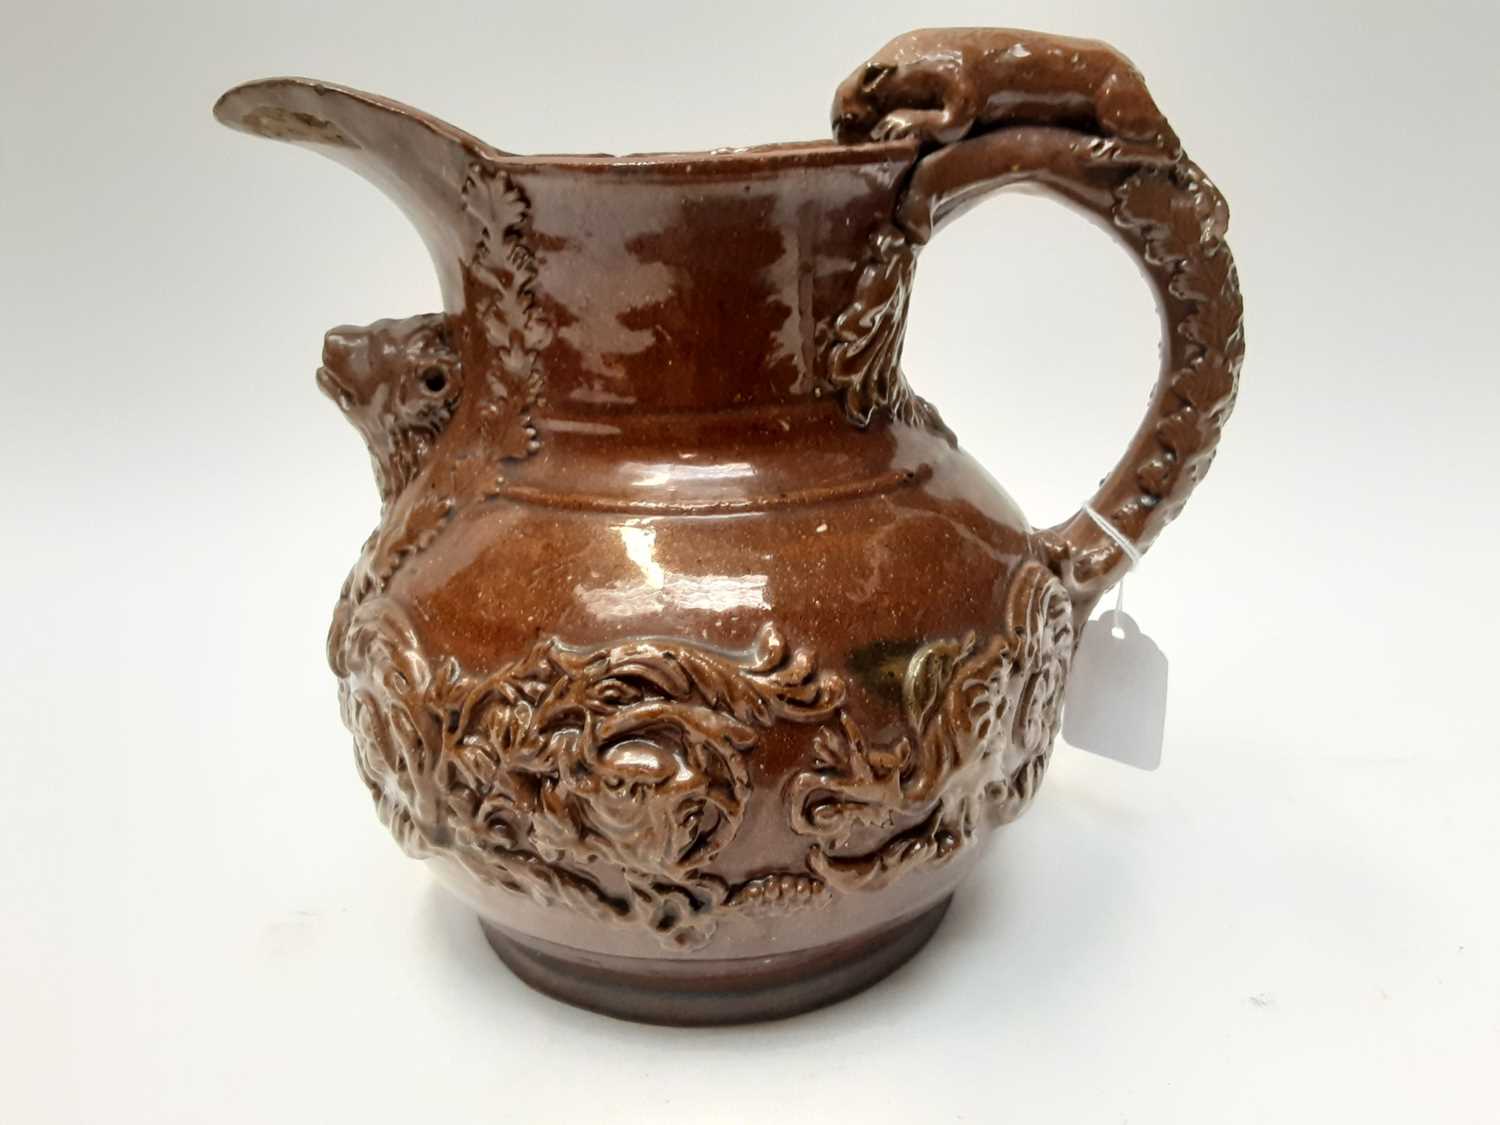 Castle Hedingham Edward Bingham brown glazed pottery jug, with lion on handle and mask decoration, 2